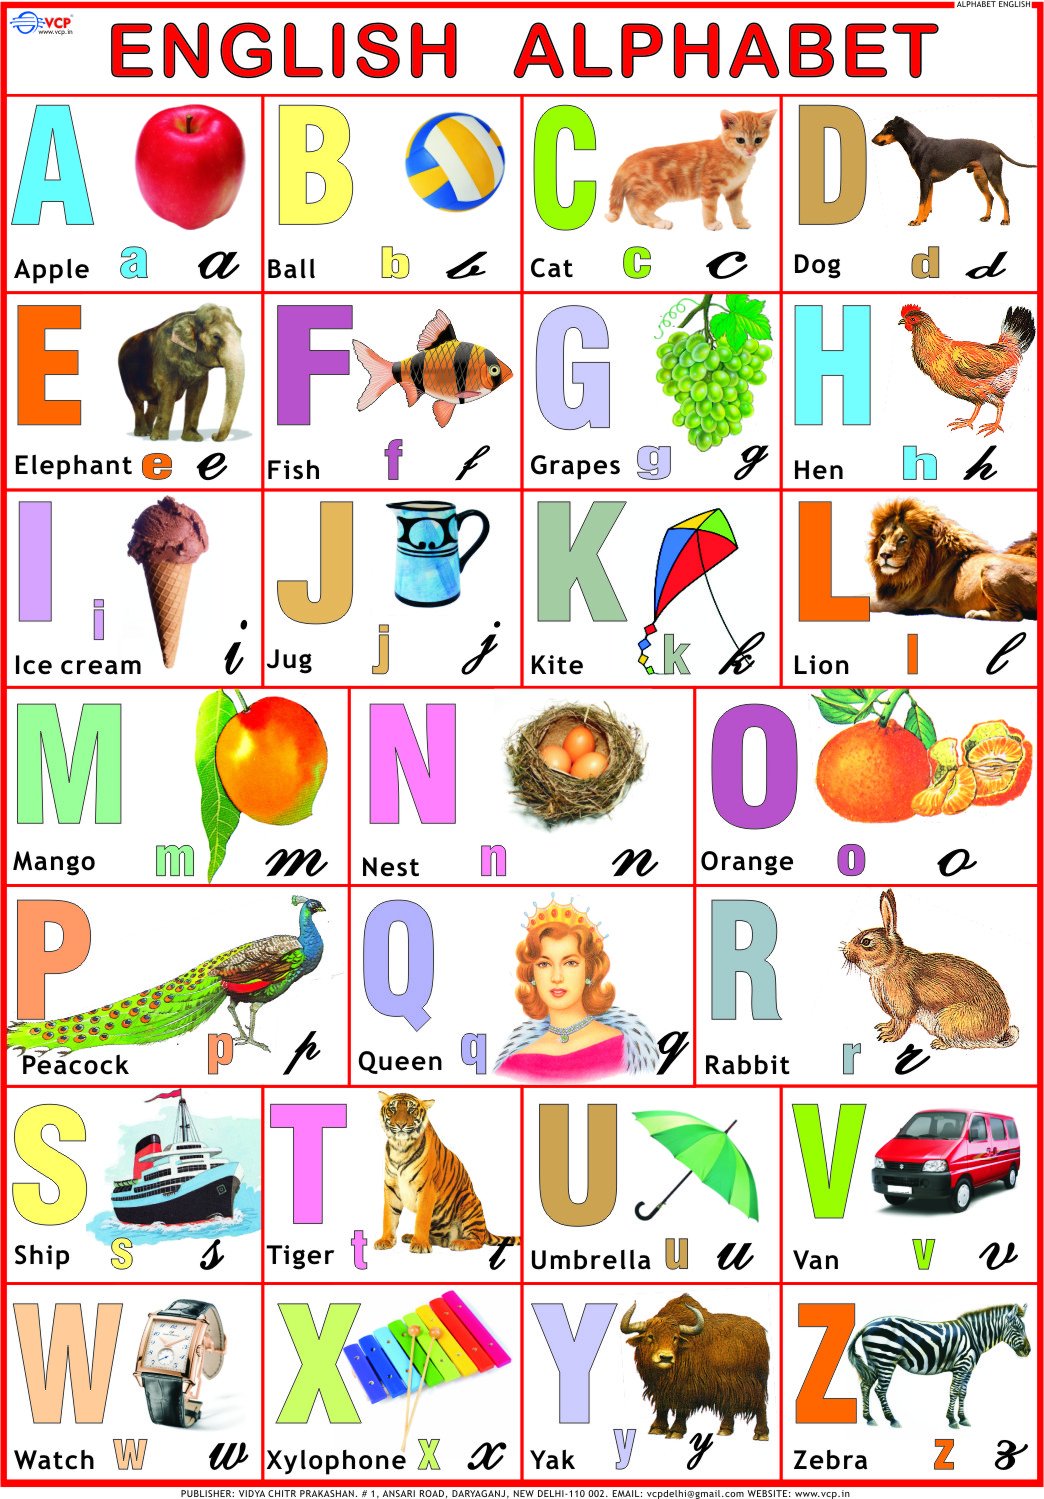 A to Z alphabet chart